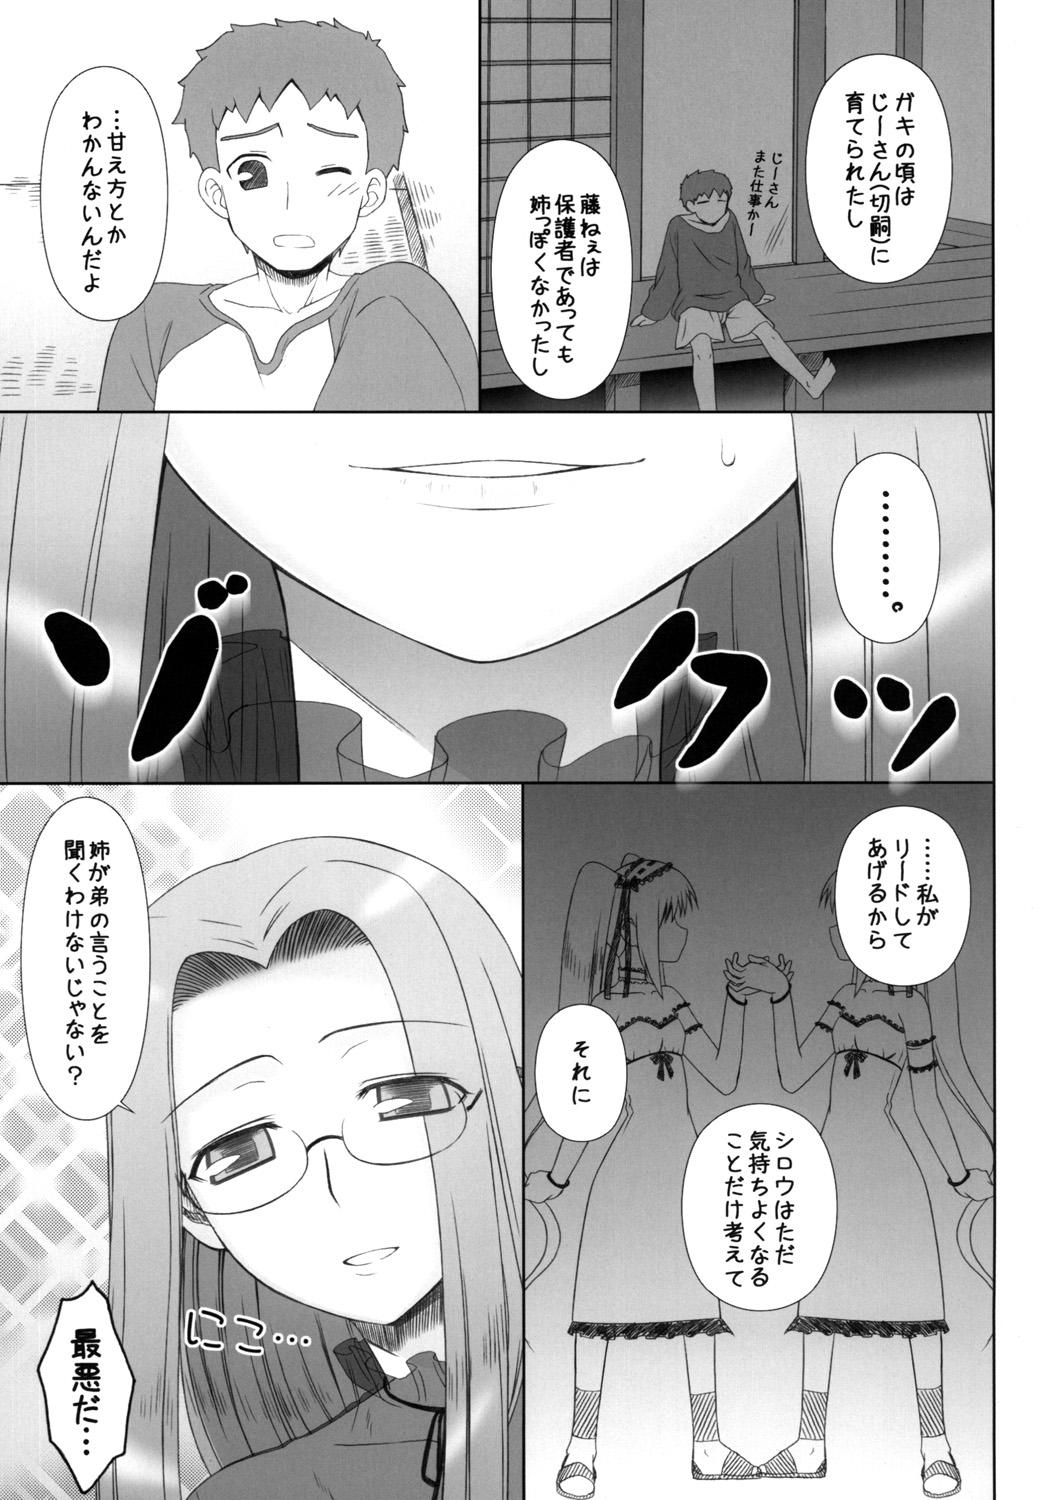 Cuzinho Yappari Rider wa Eroi na 8 "Rider, Oneechan ni naru" - Fate stay night Blackdick - Page 6